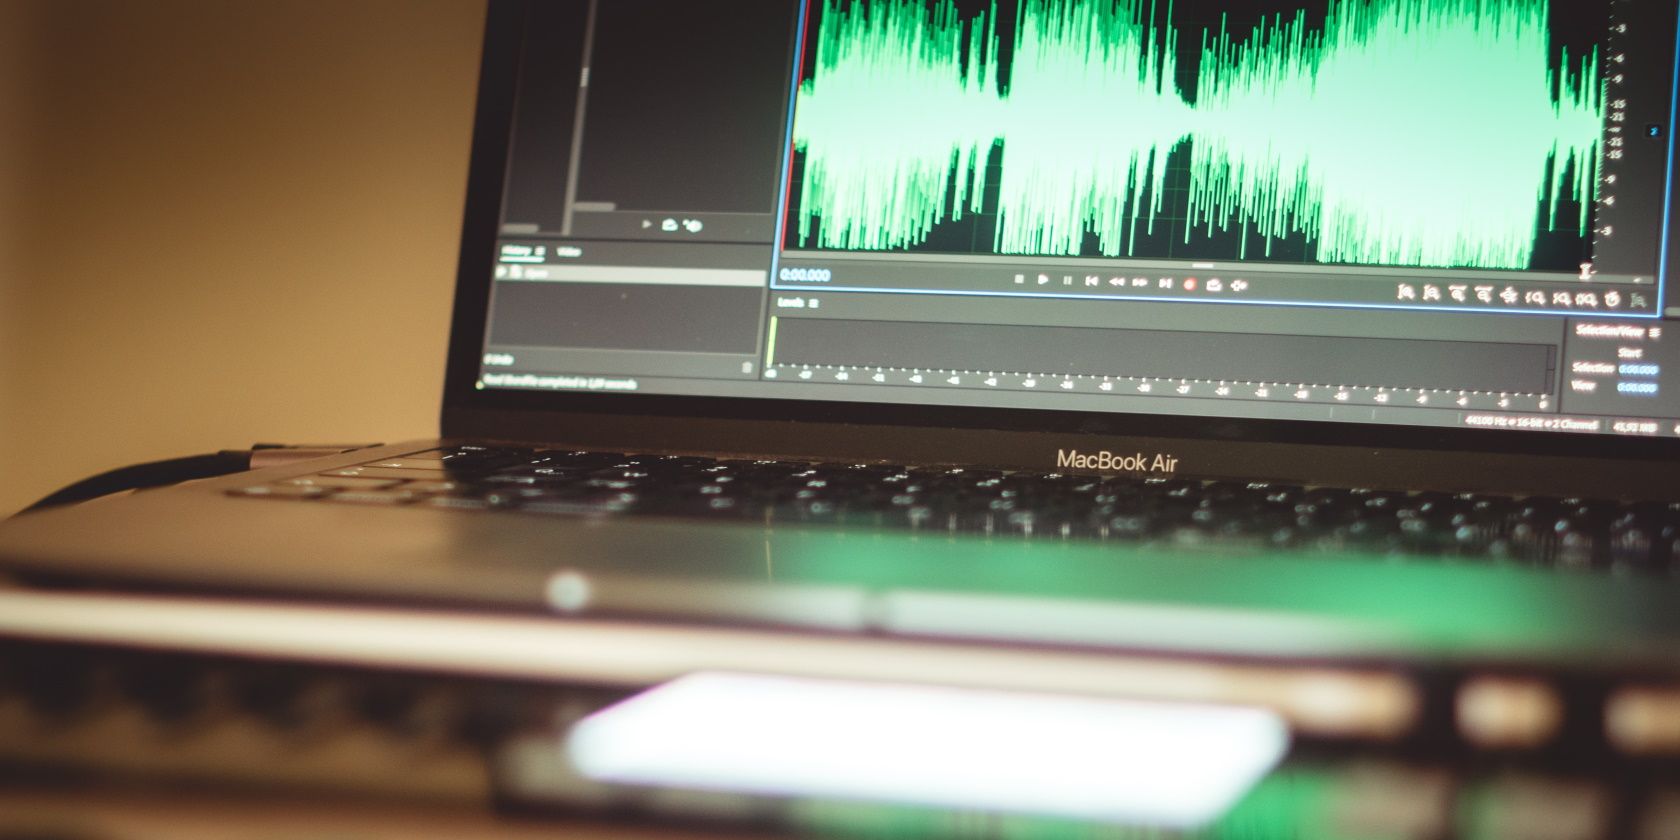 Audio editing tool on a Macbook Air laptop